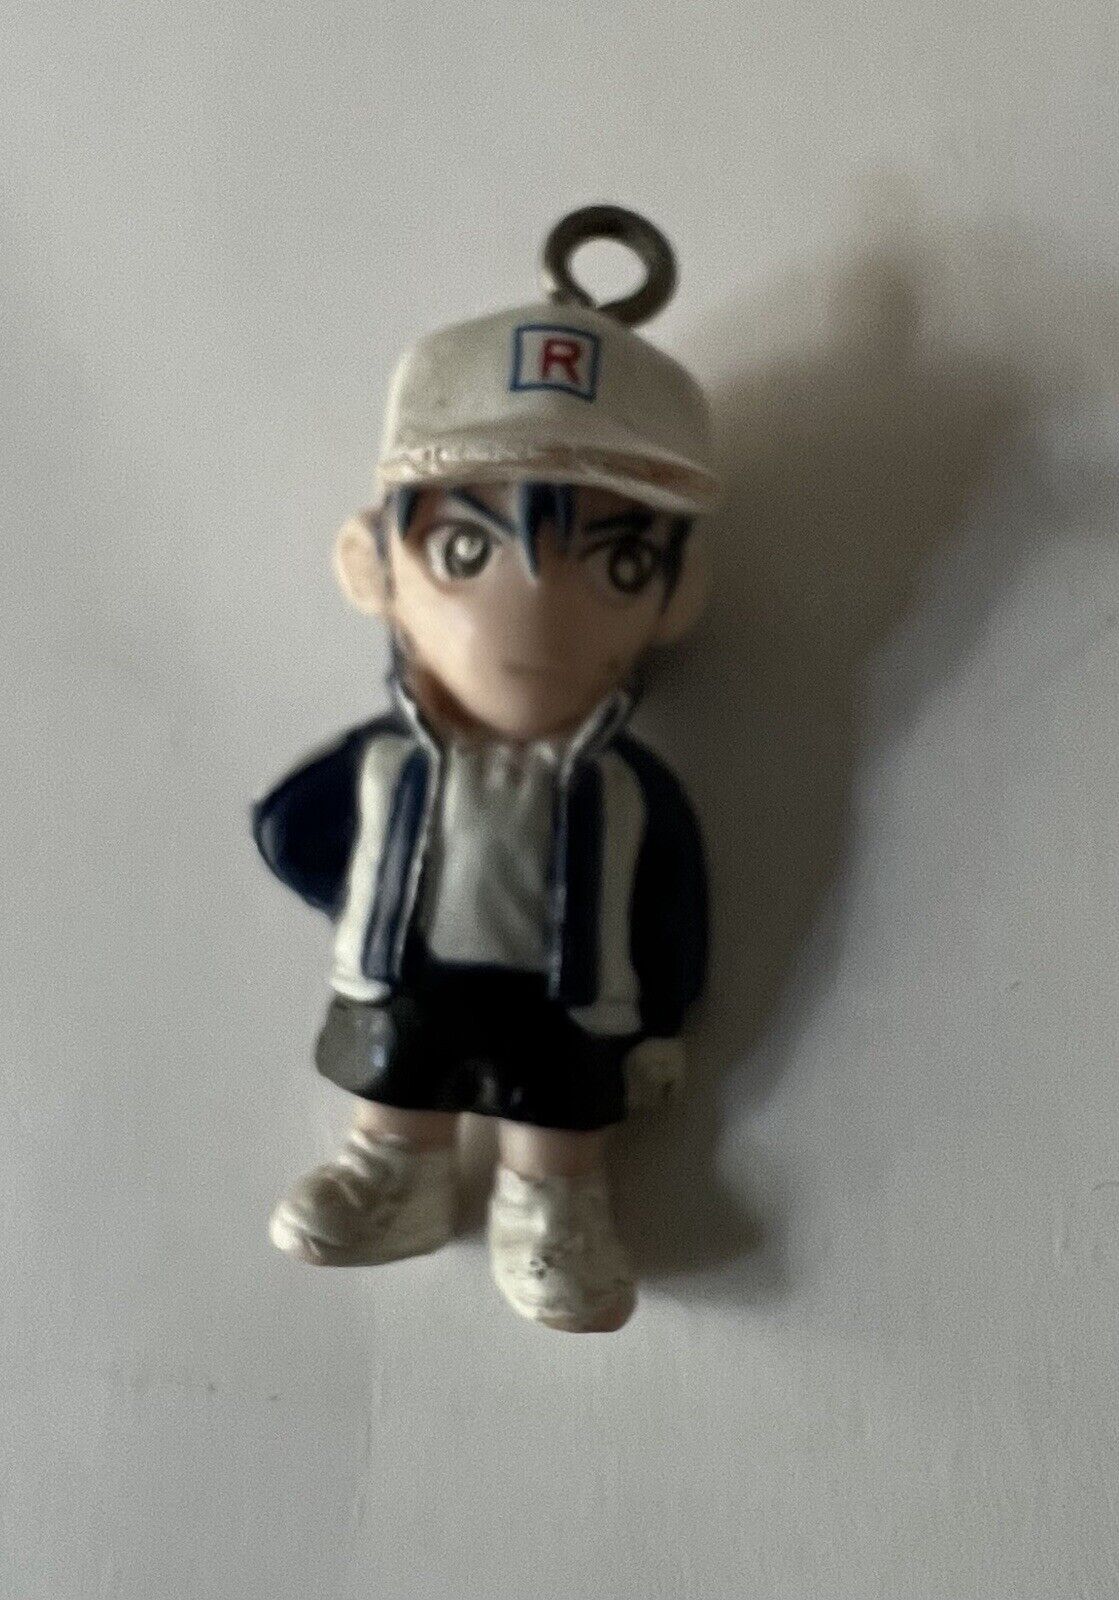 Prince Of Tennis Seigaku Anime Ryoma Echyzen Mini Figure Key Charm /Chain FLAWED